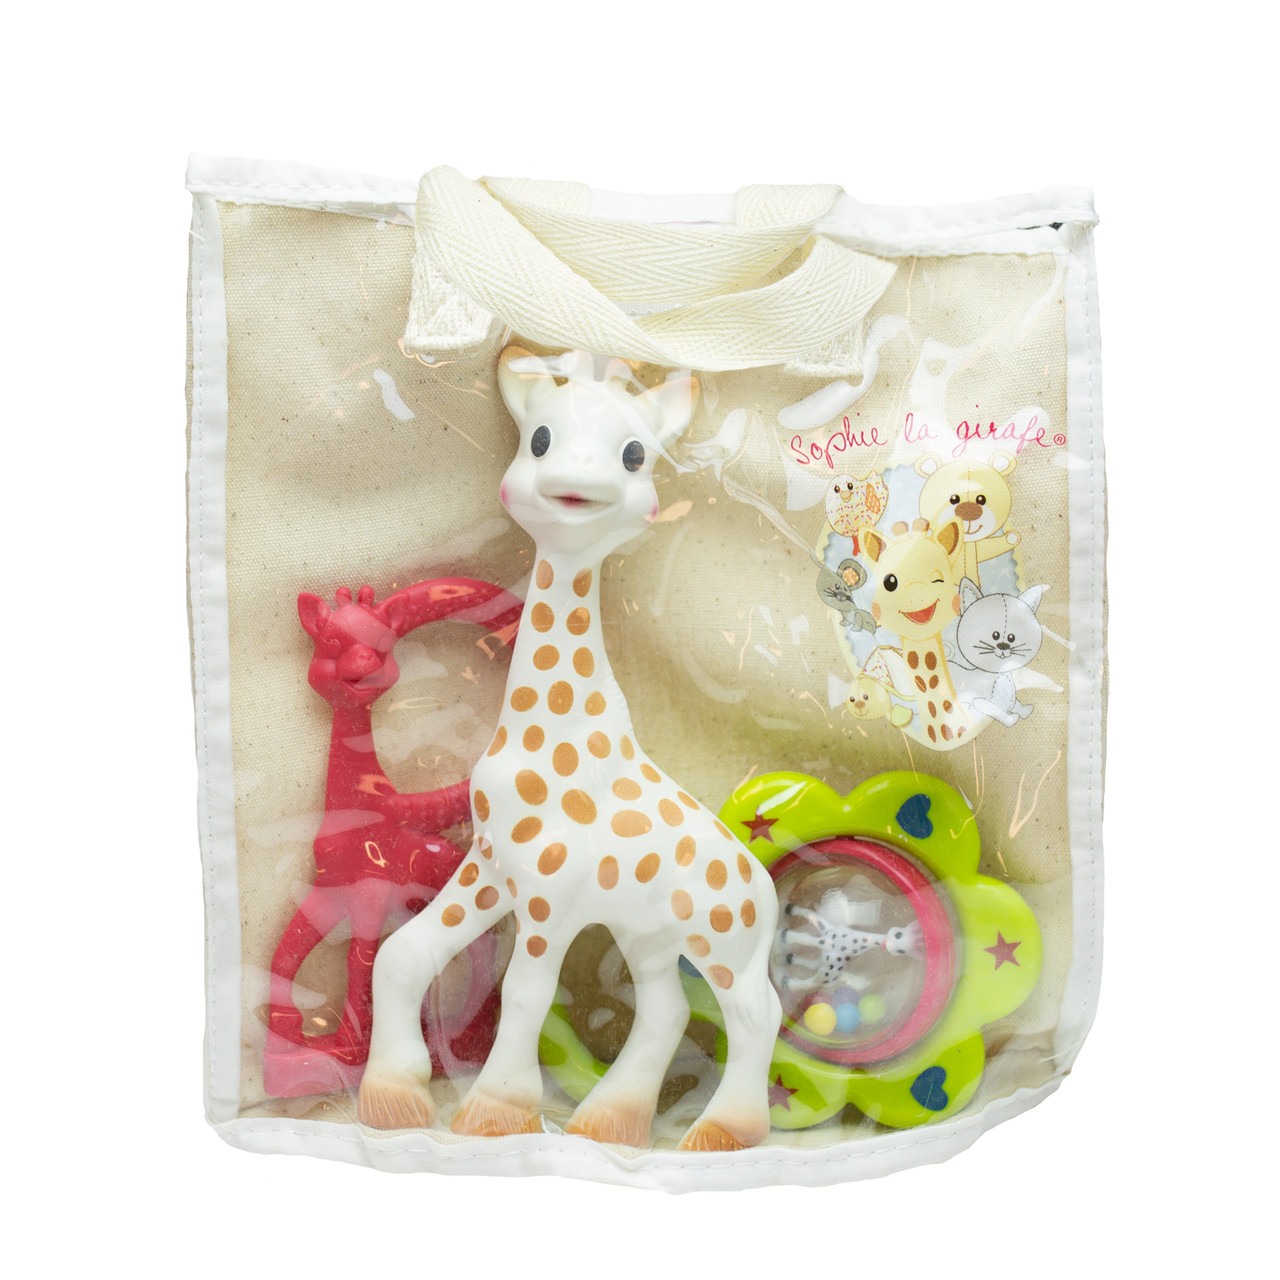 Sophie la girafe® and her bag